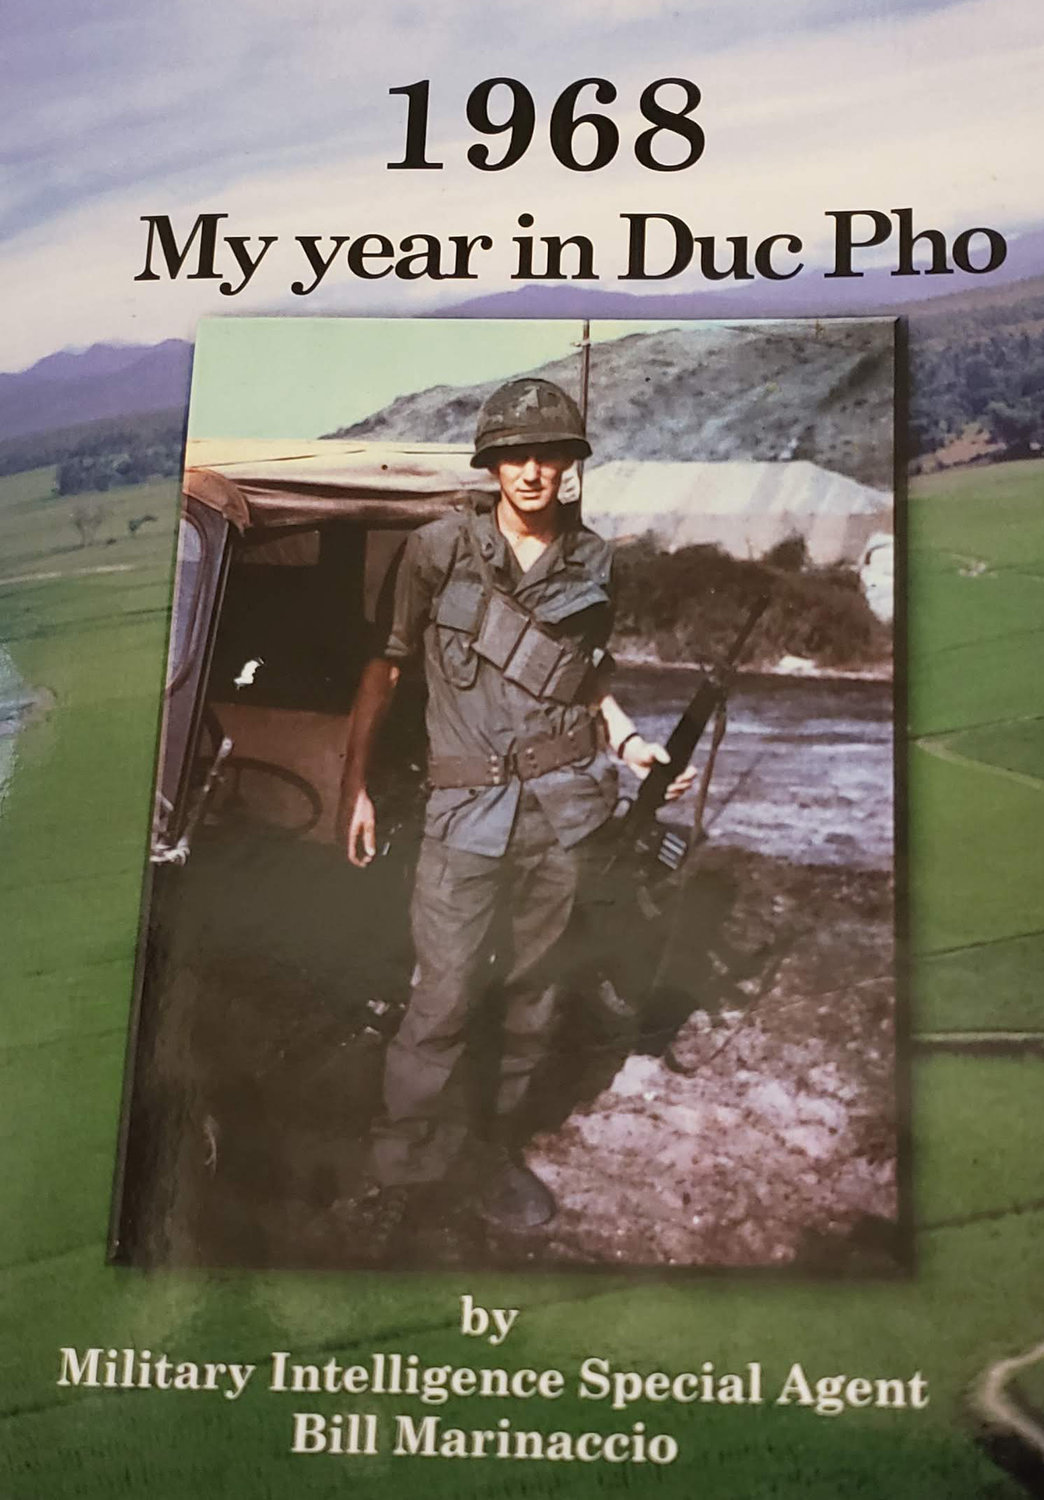 Marinaccio “1968: My Year in Duc Pho.”